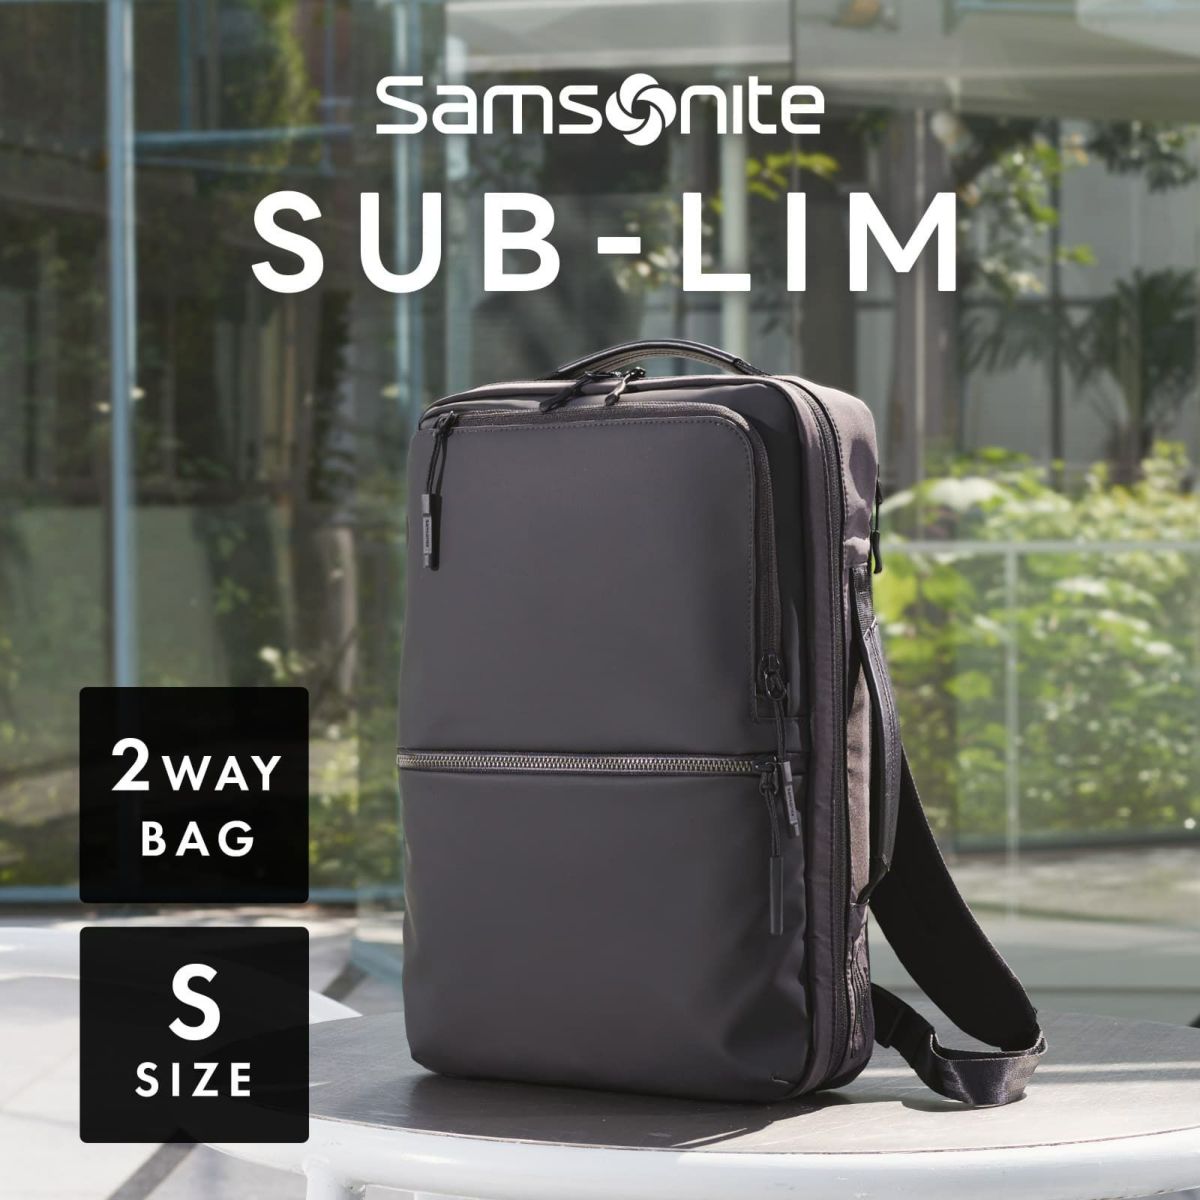 Samsonite サムソナイト】 SUB-LIM 2WAY BAG S ビジネスバッグ Sサイズ 